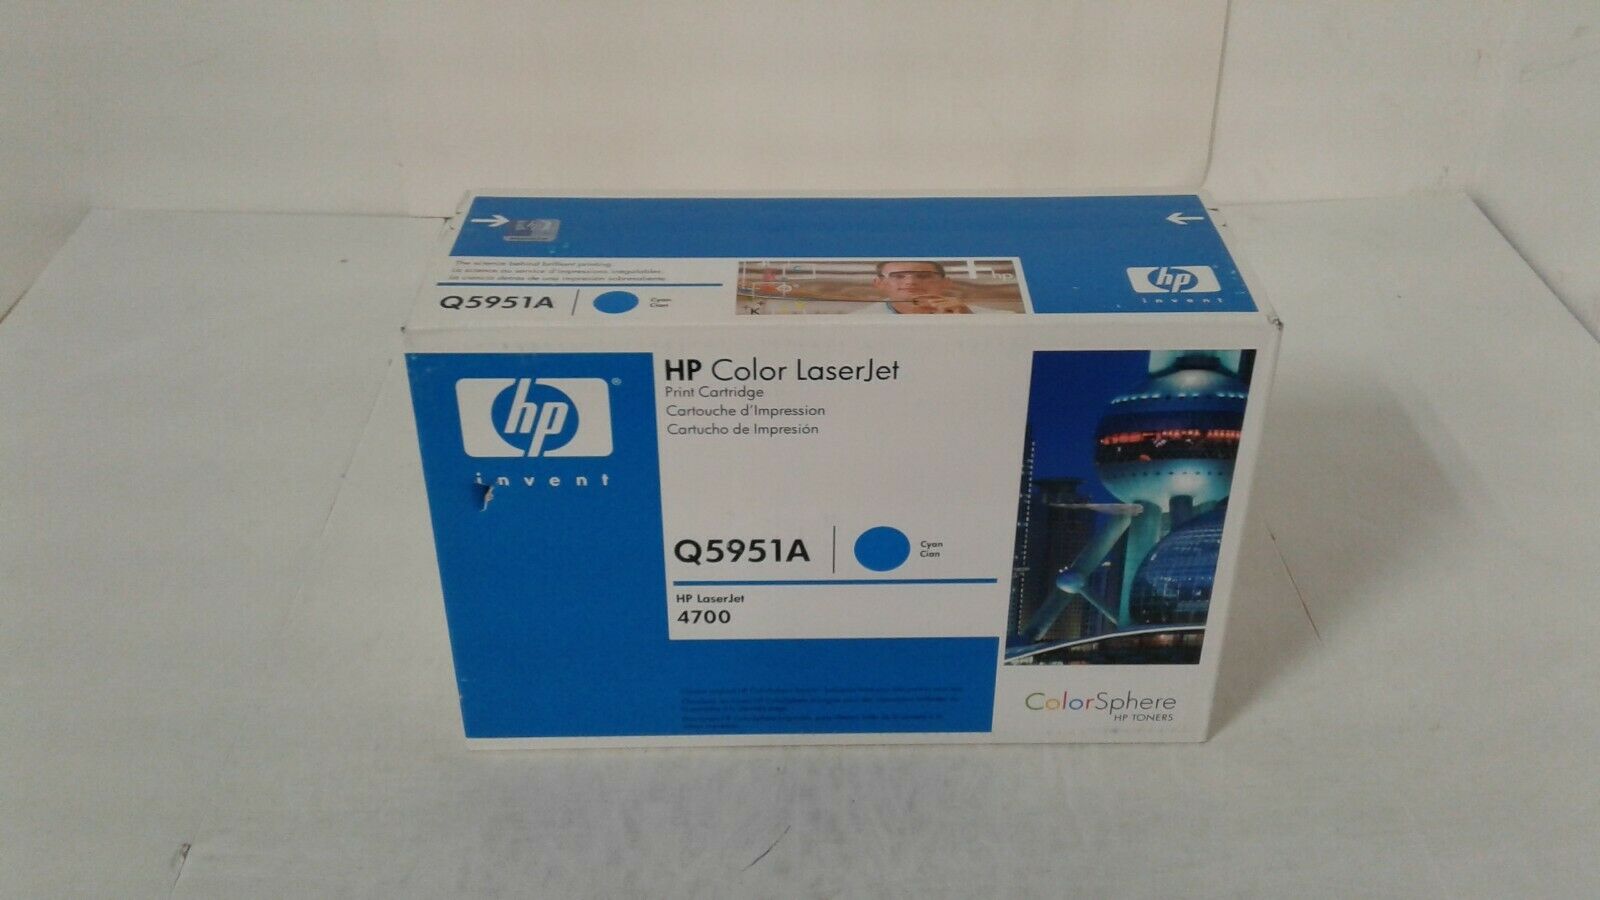 HP 643A Toner Ctg Q5951A Cyan 10k for HP Color LaserJet 4700/4700dn/4700dtn.